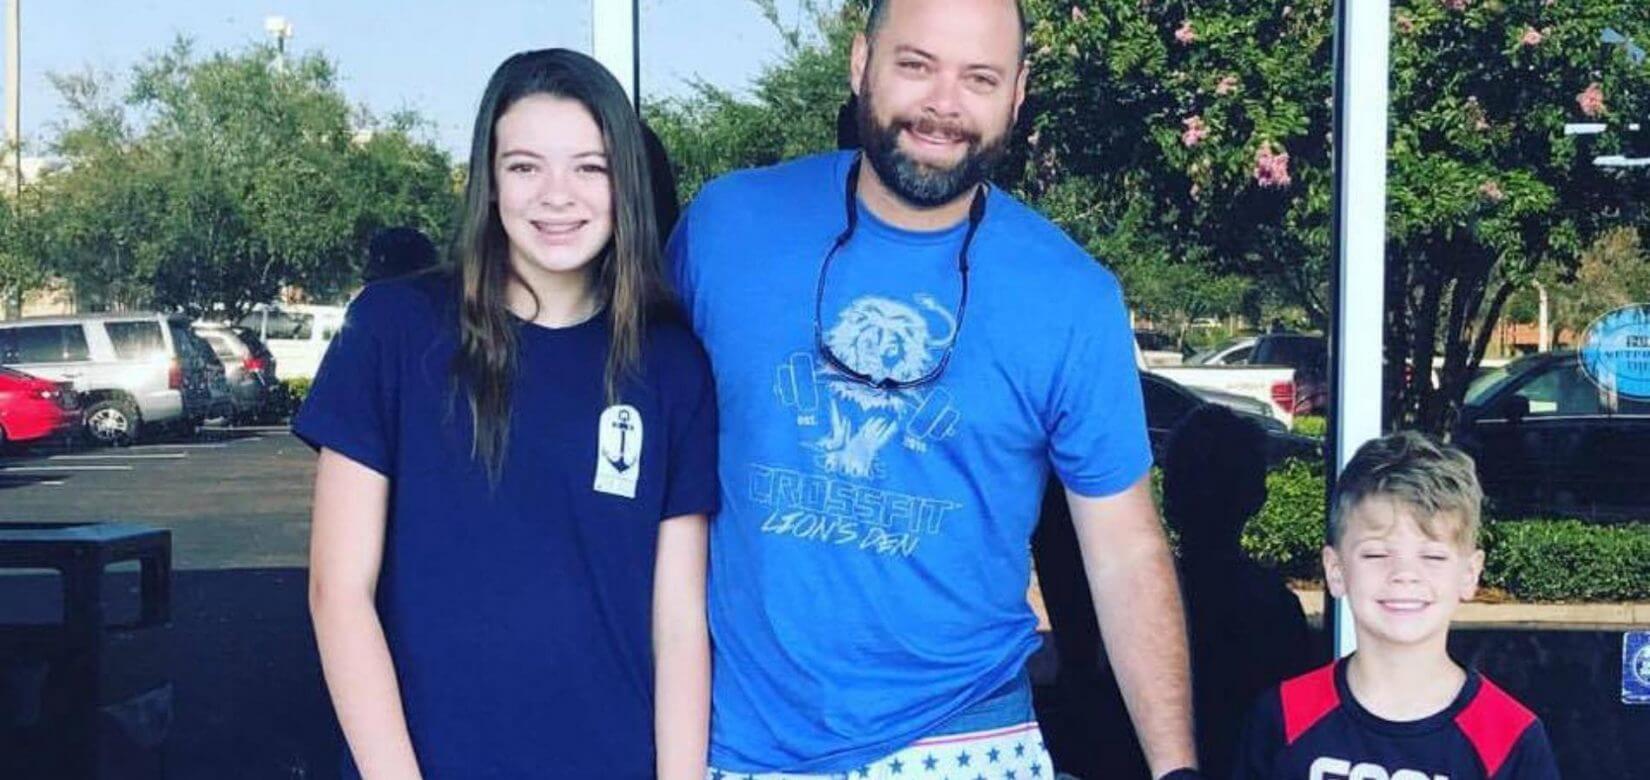 Viral: Πατέρας φόρεσε σορτς για να δείξει στην κόρη του πόσο άσχημο είναι & το Internet "κλαίει"!